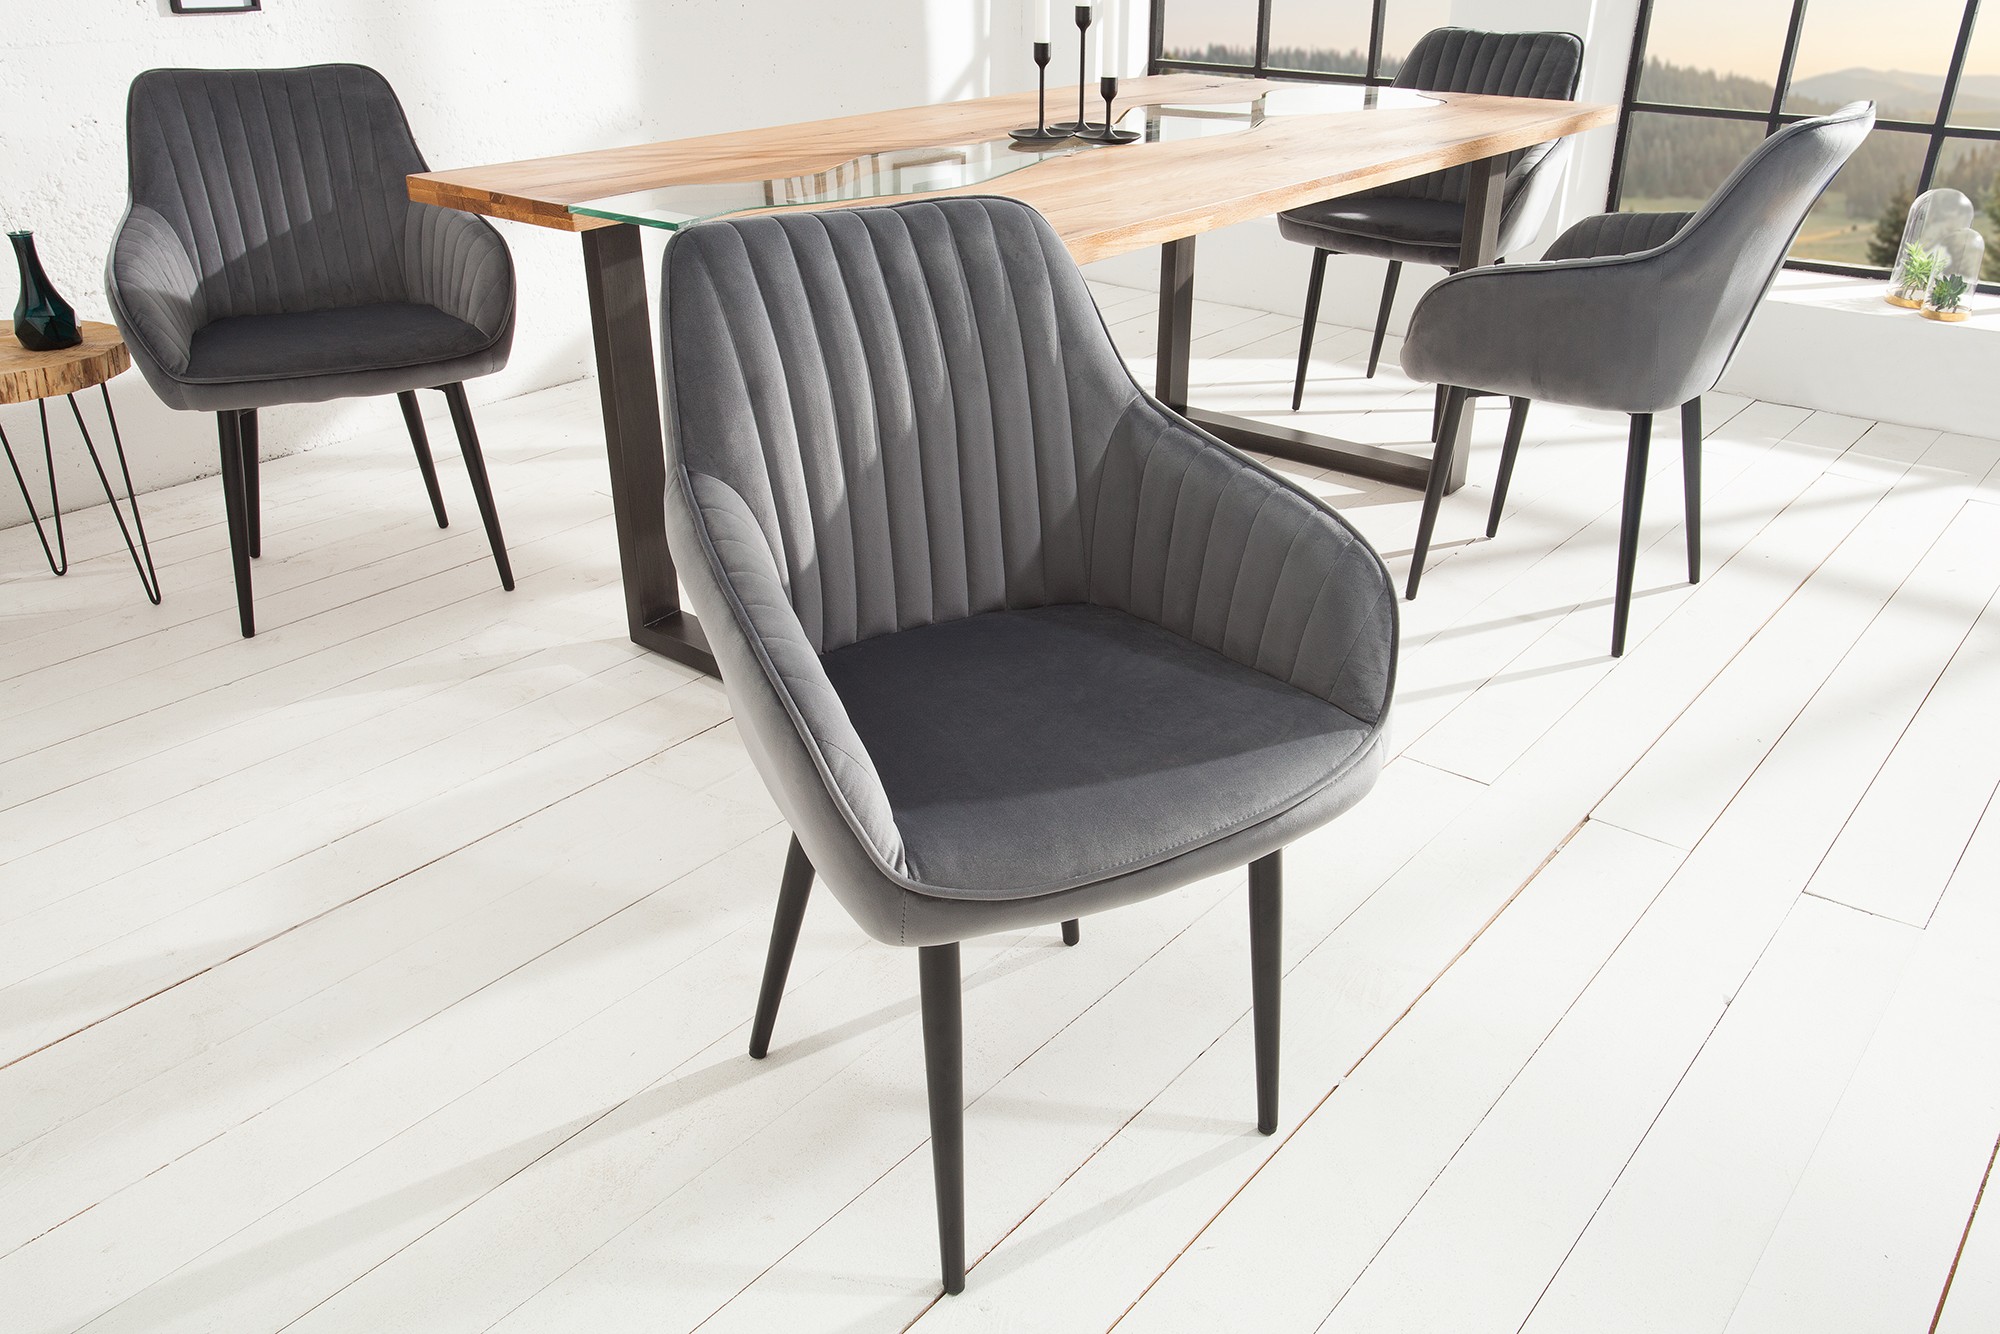 Estila Designová židle Timeless Comfort stříbro šedá